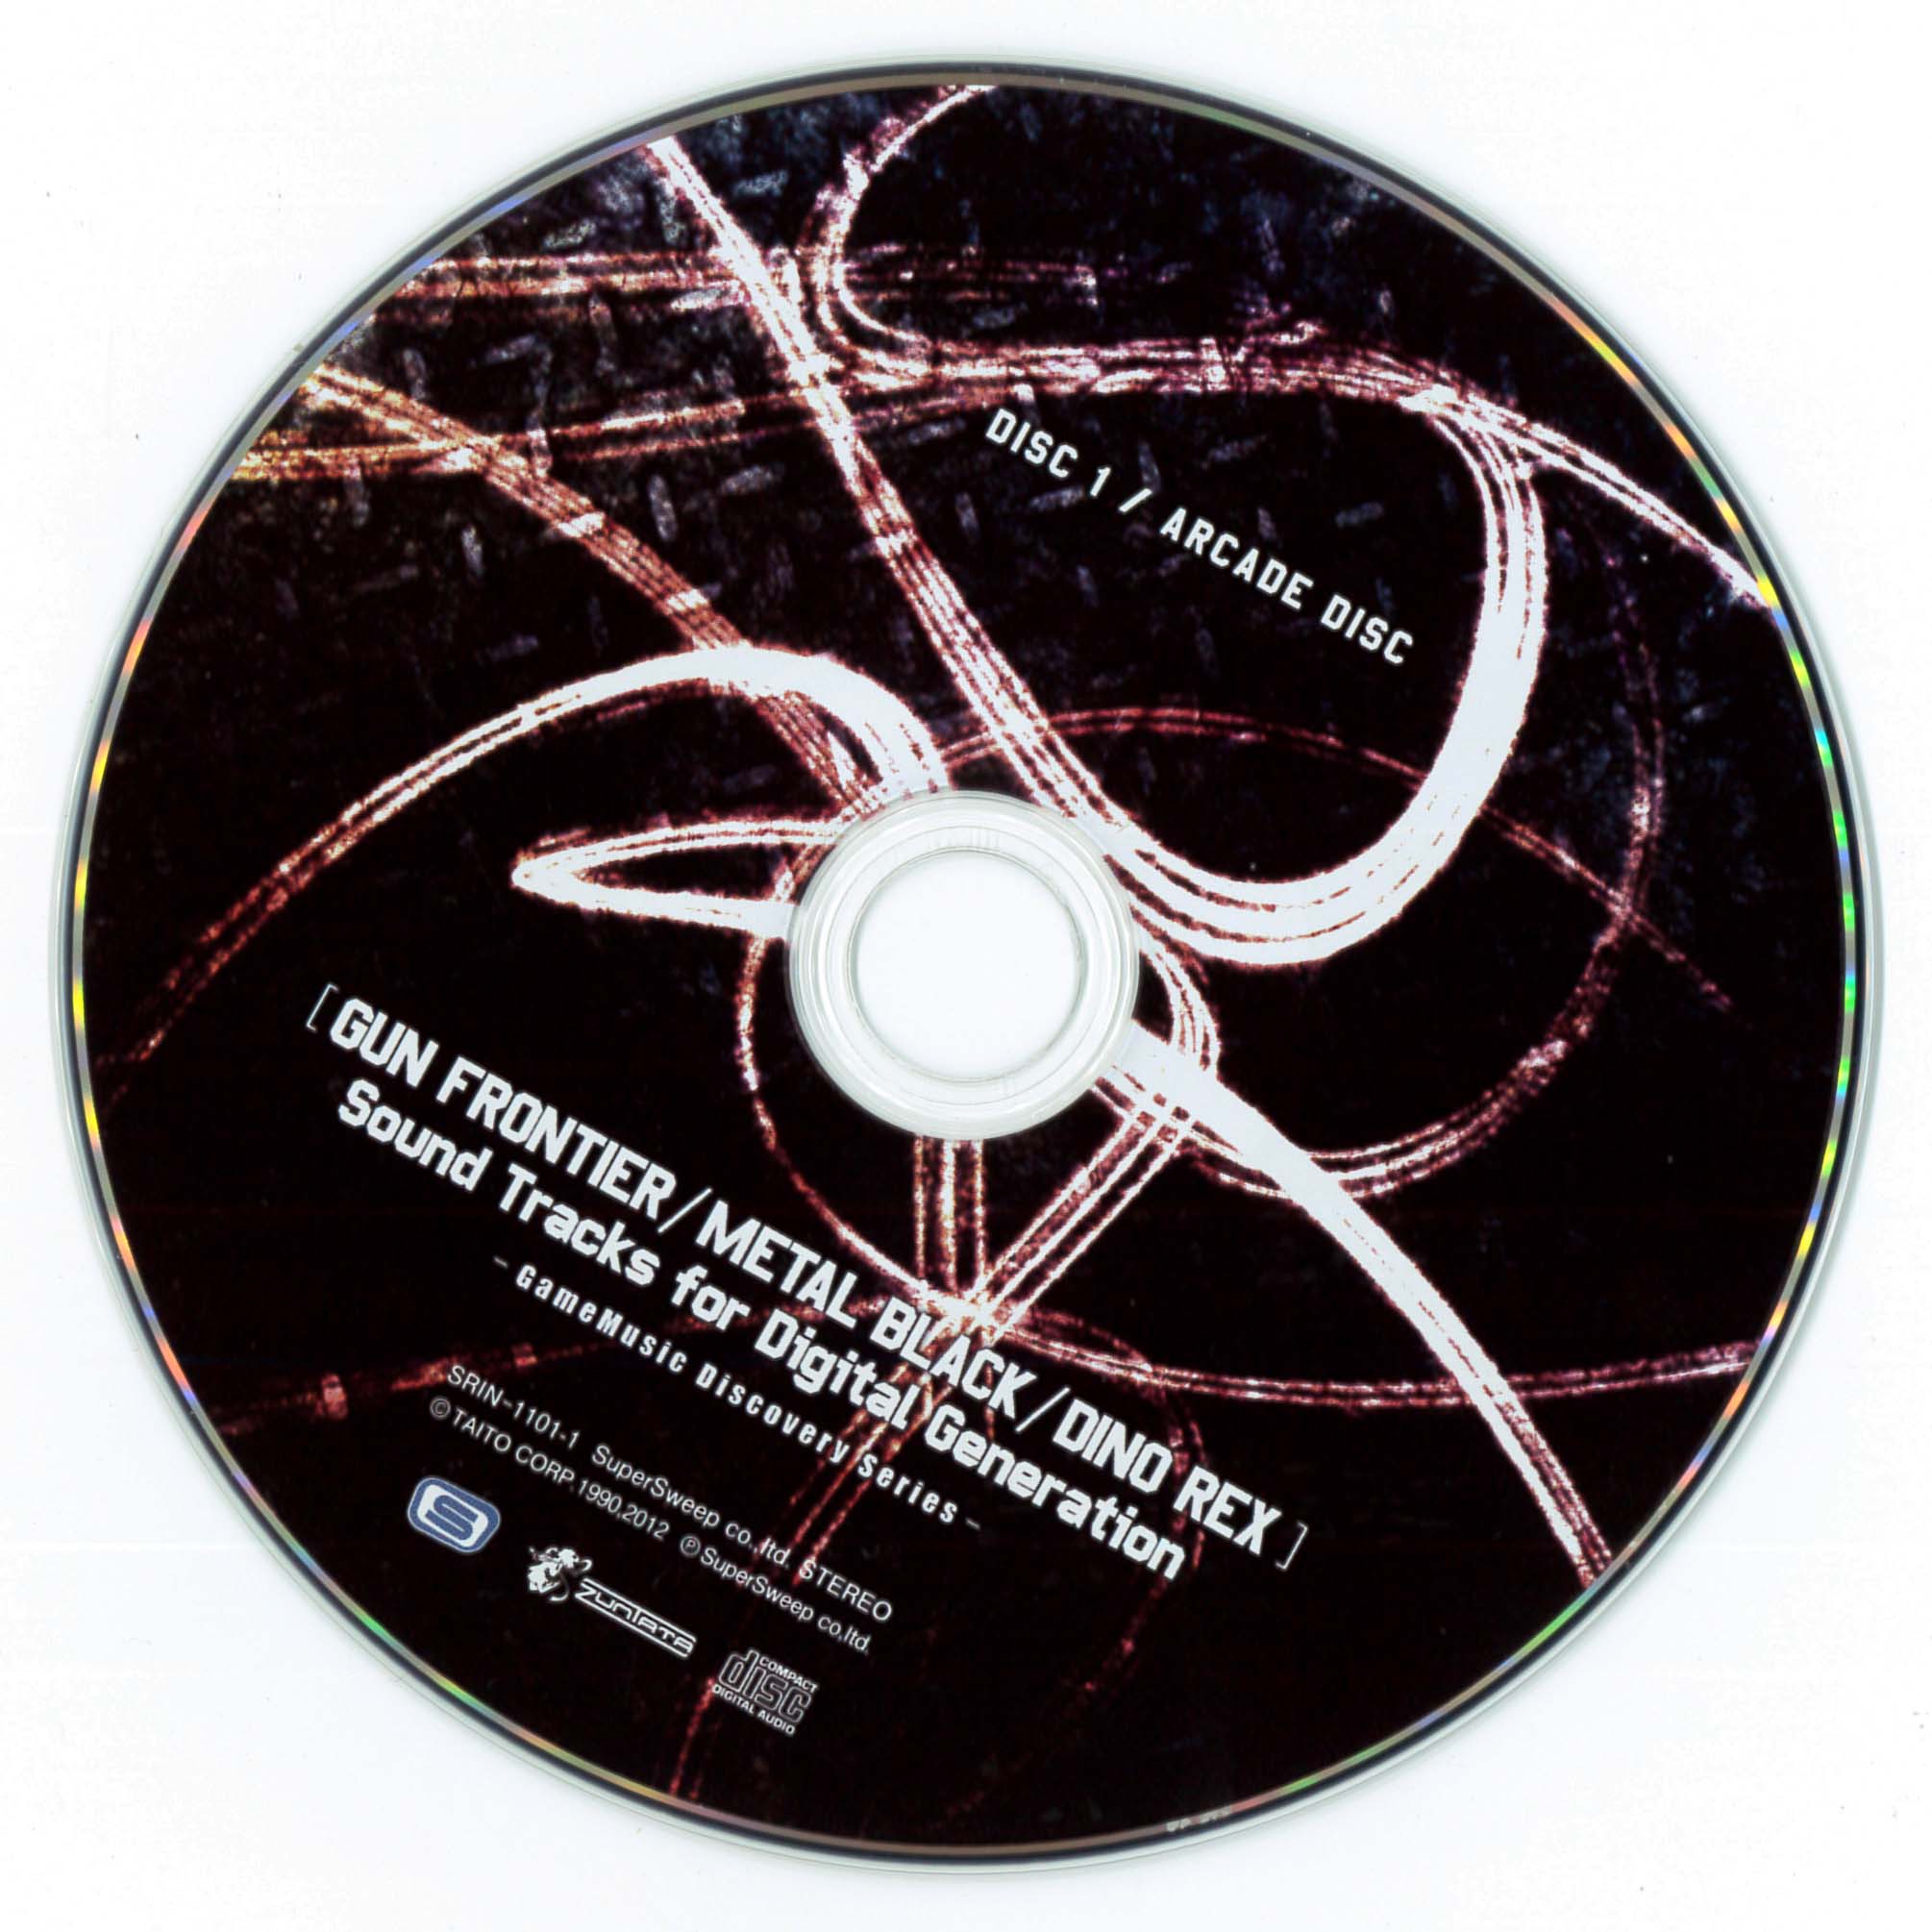 GUN FRONTIER/METAL BLACK/DINO REX Sound Tracks for Digital Generation ~GameMusic  Discovery Series~ (2012) MP3 - Download GUN FRONTIER/METAL BLACK/DINO REX  Sound Tracks for Digital Generation ~GameMusic Discovery Series~ (2012)  Soundtracks for FREE!